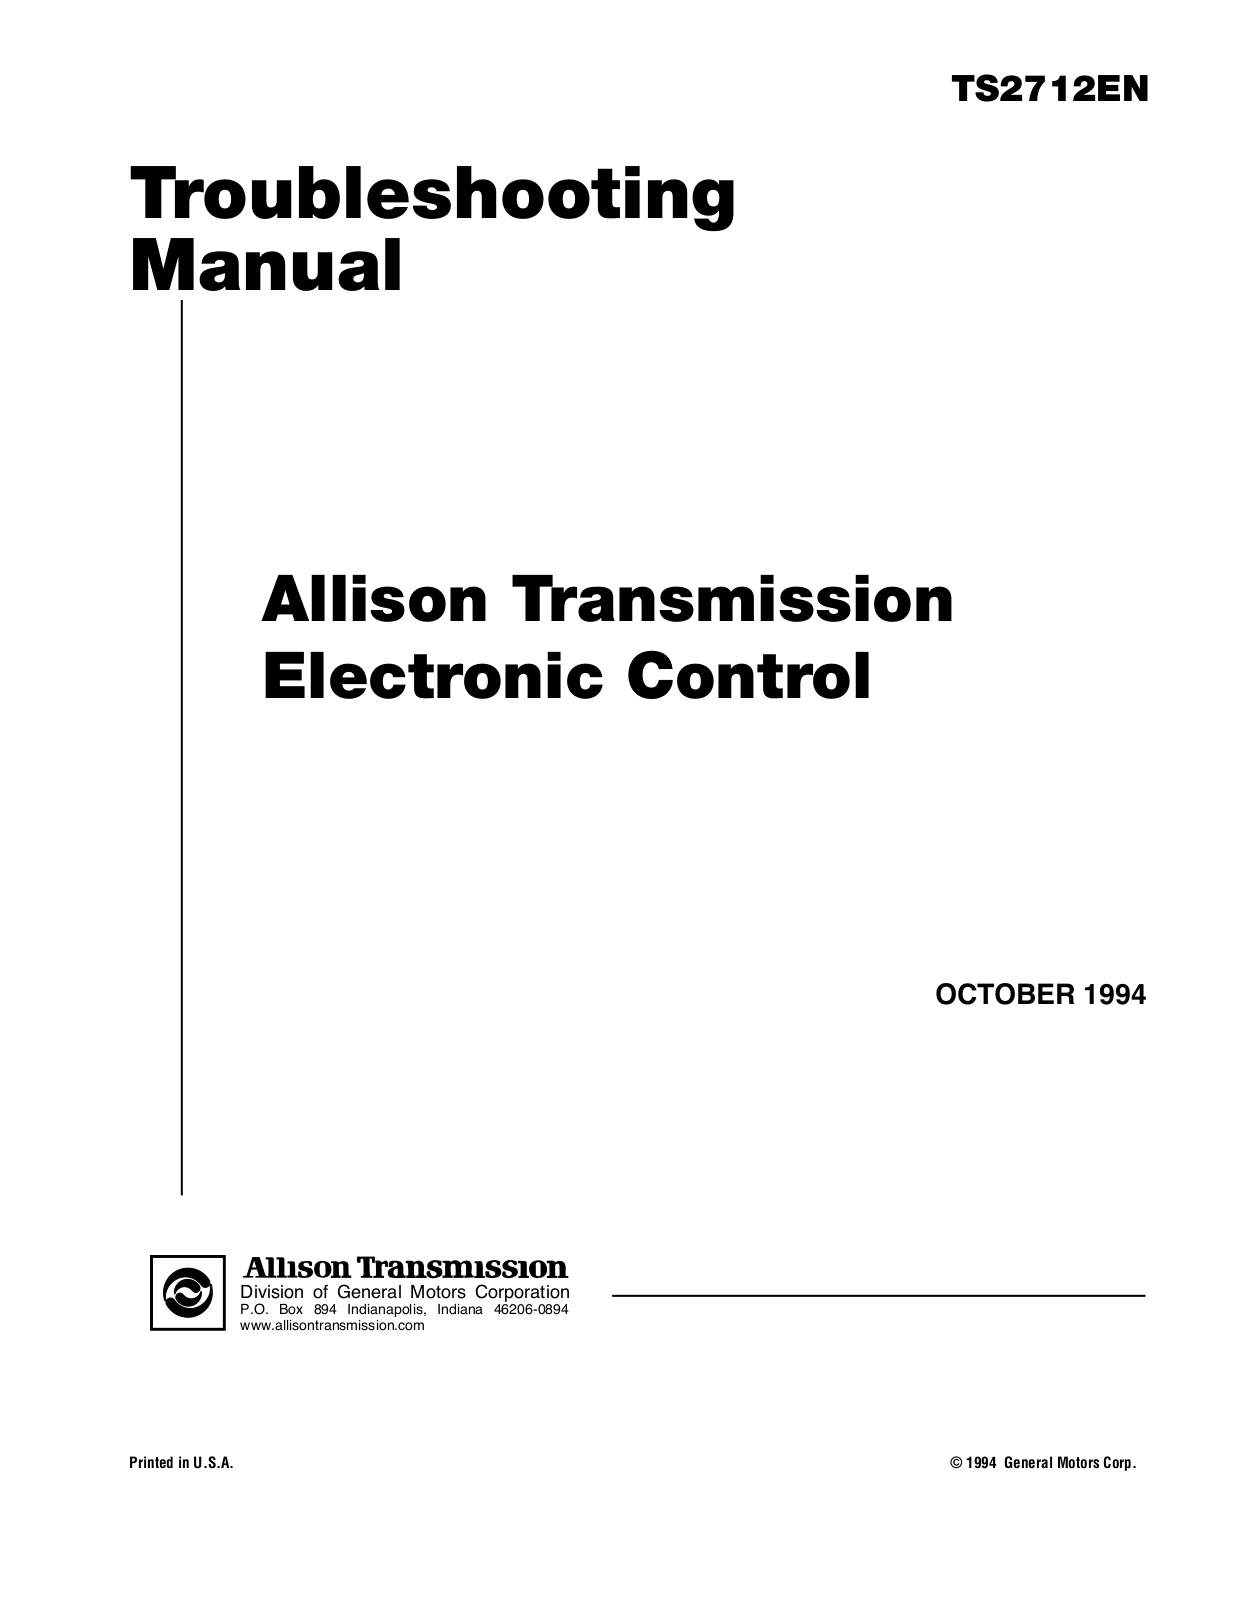 Allison Transmission Electronic Controls Troubleshooting Manual